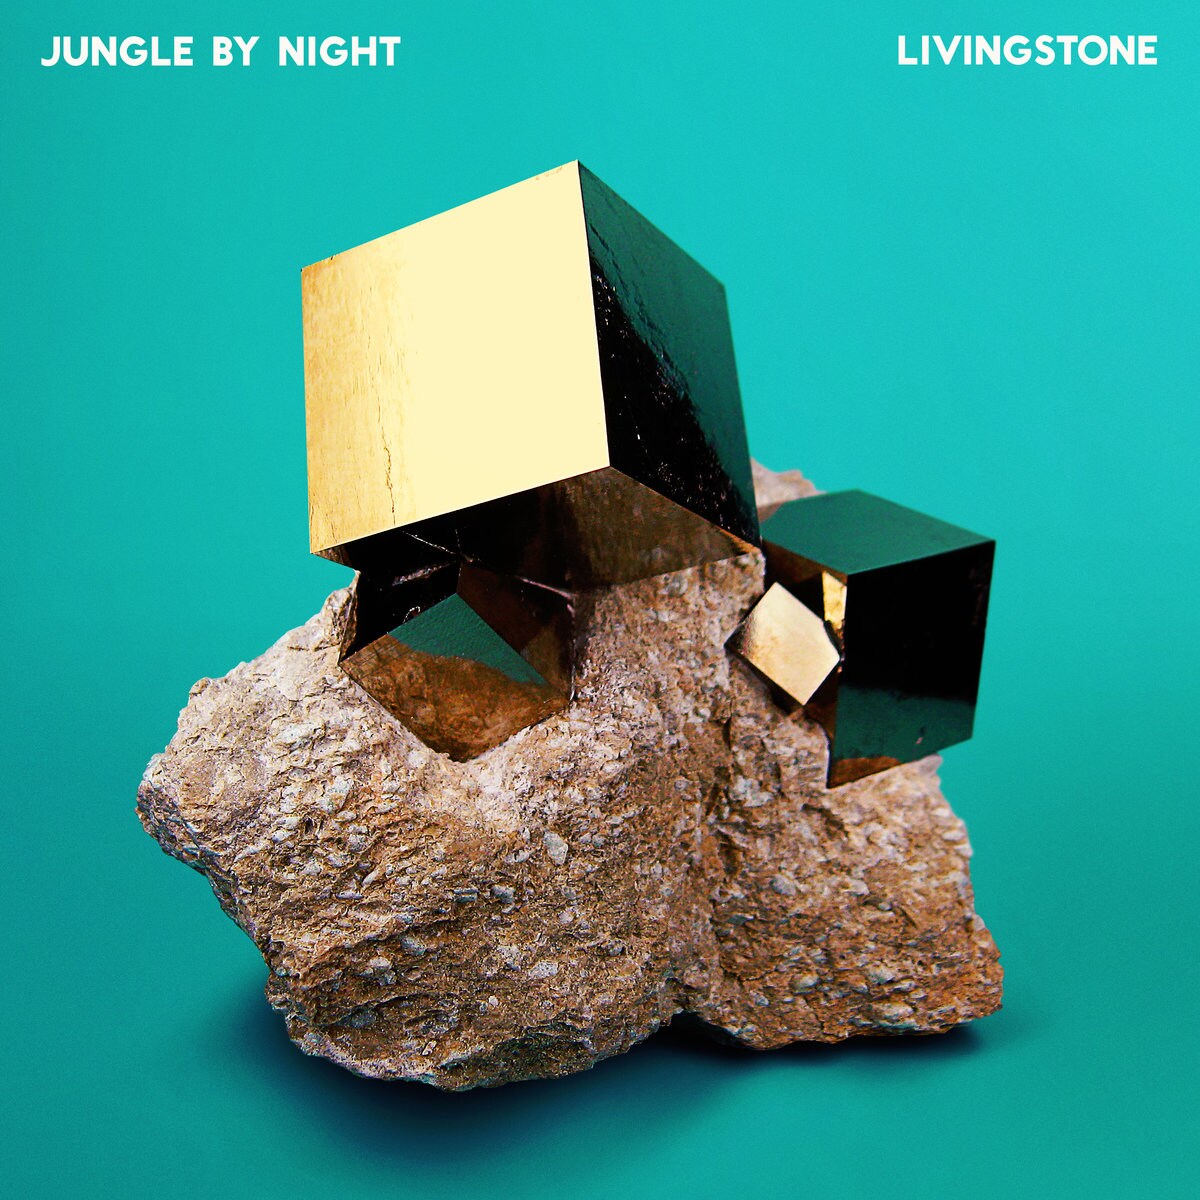 10. Jungle By Night - Livingstone